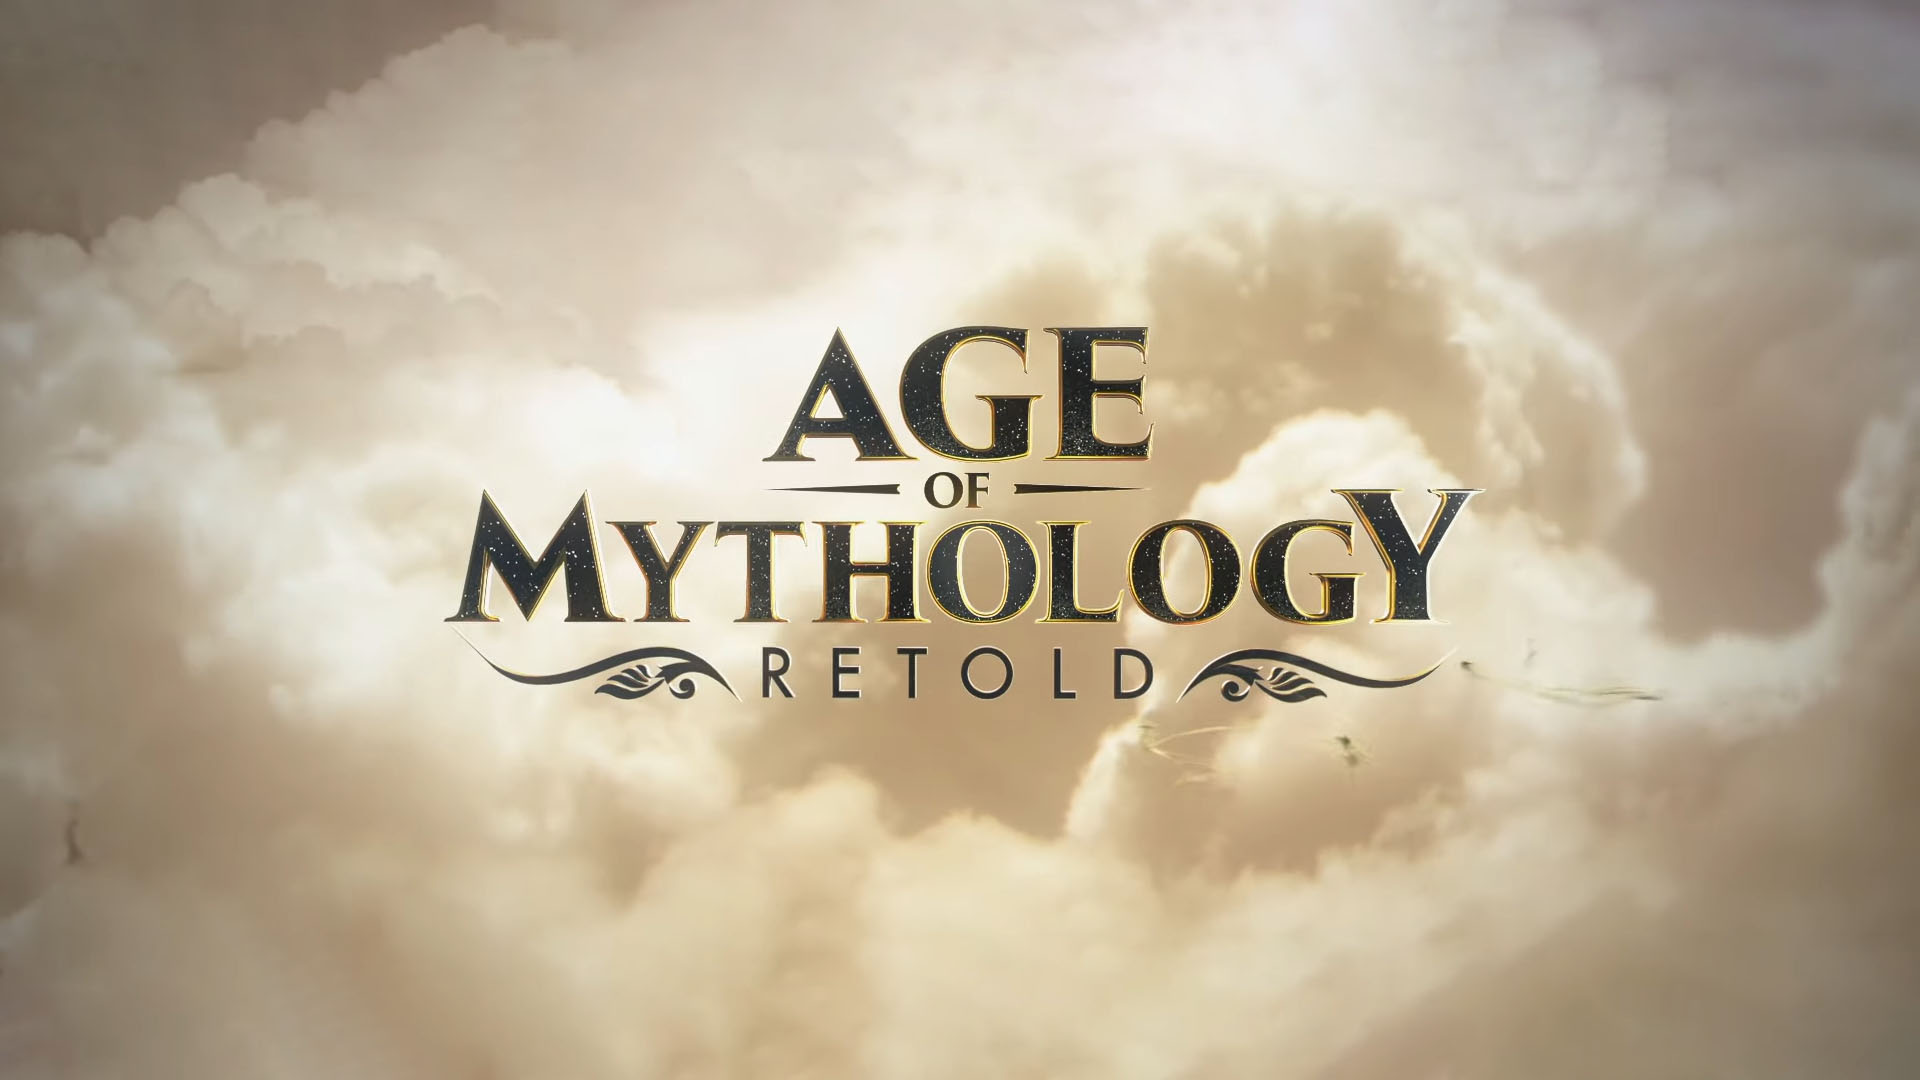 Age of Mythology Retold foi anunciado oficialmente!